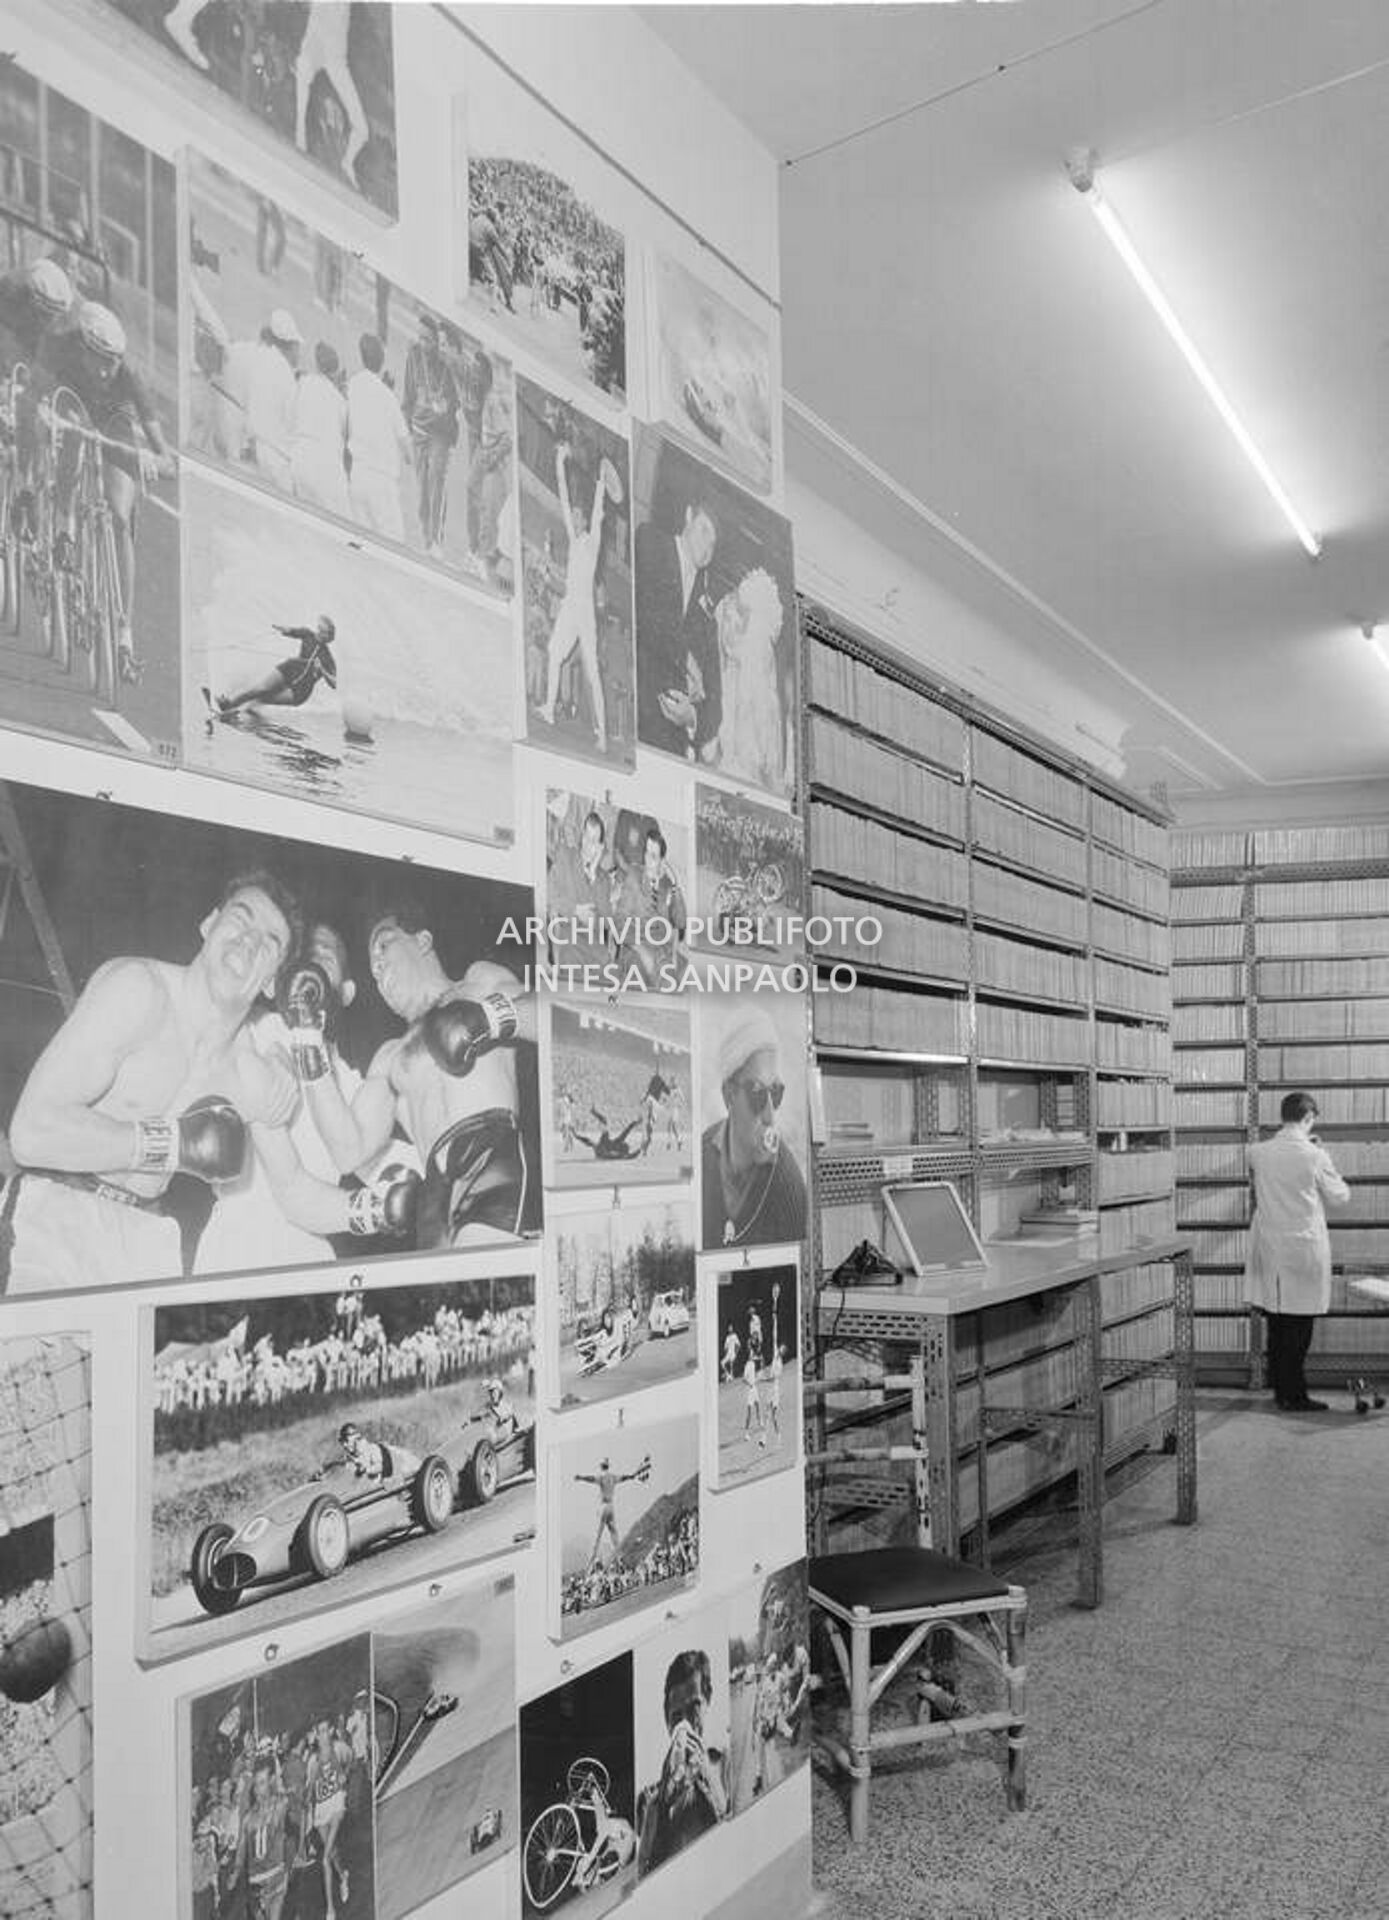 Archives of Publifoto agency in Milan